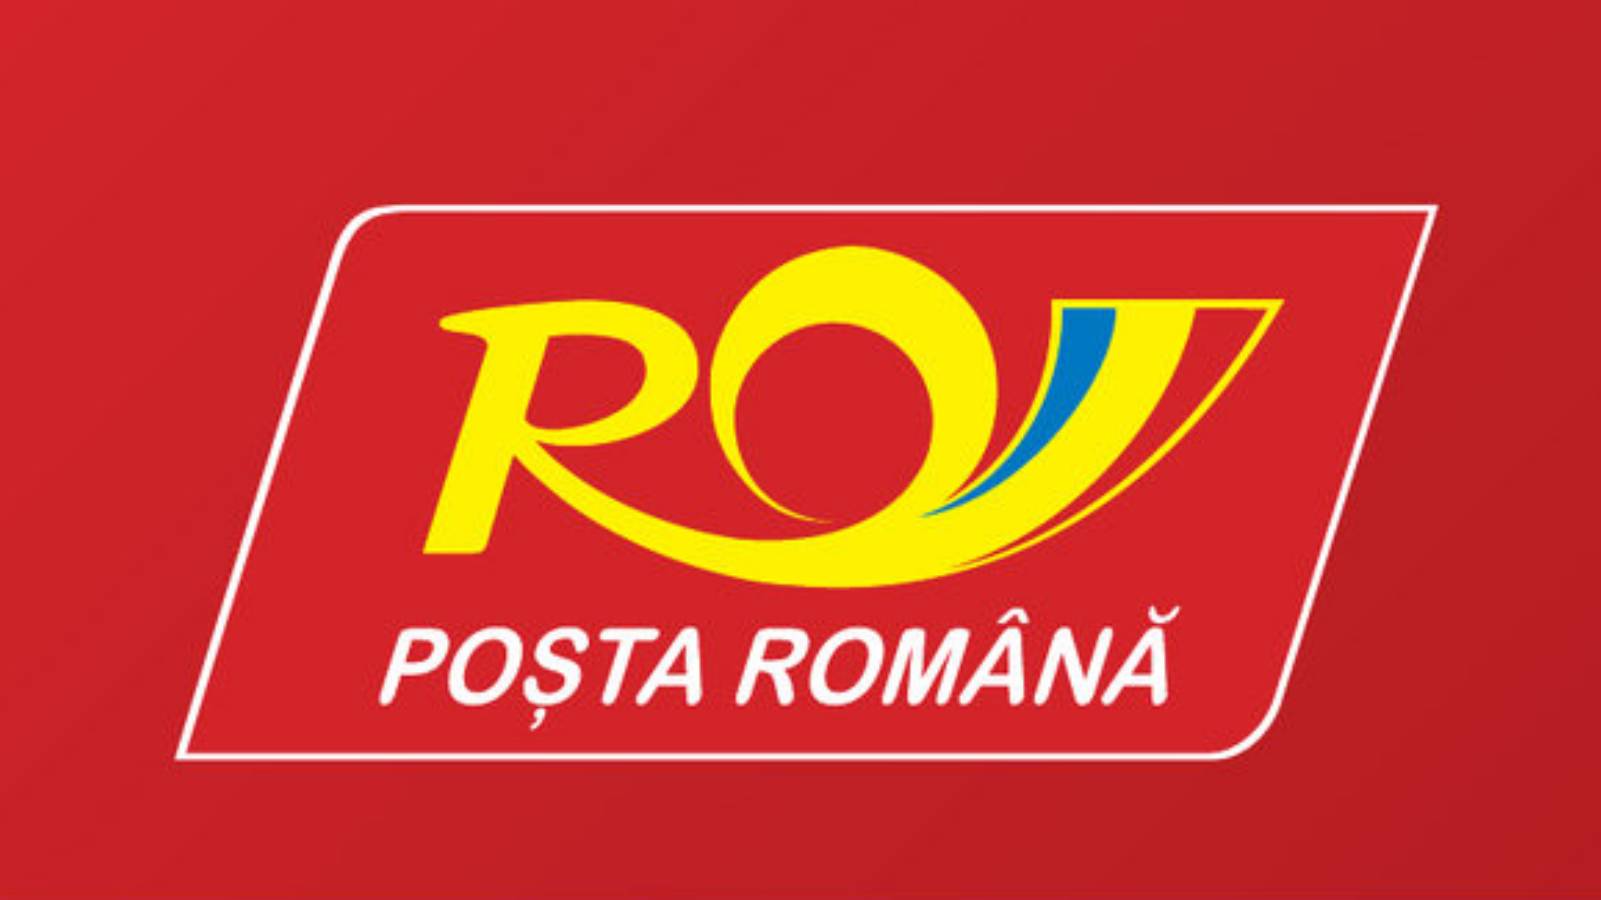 Romanian post office constant customs office